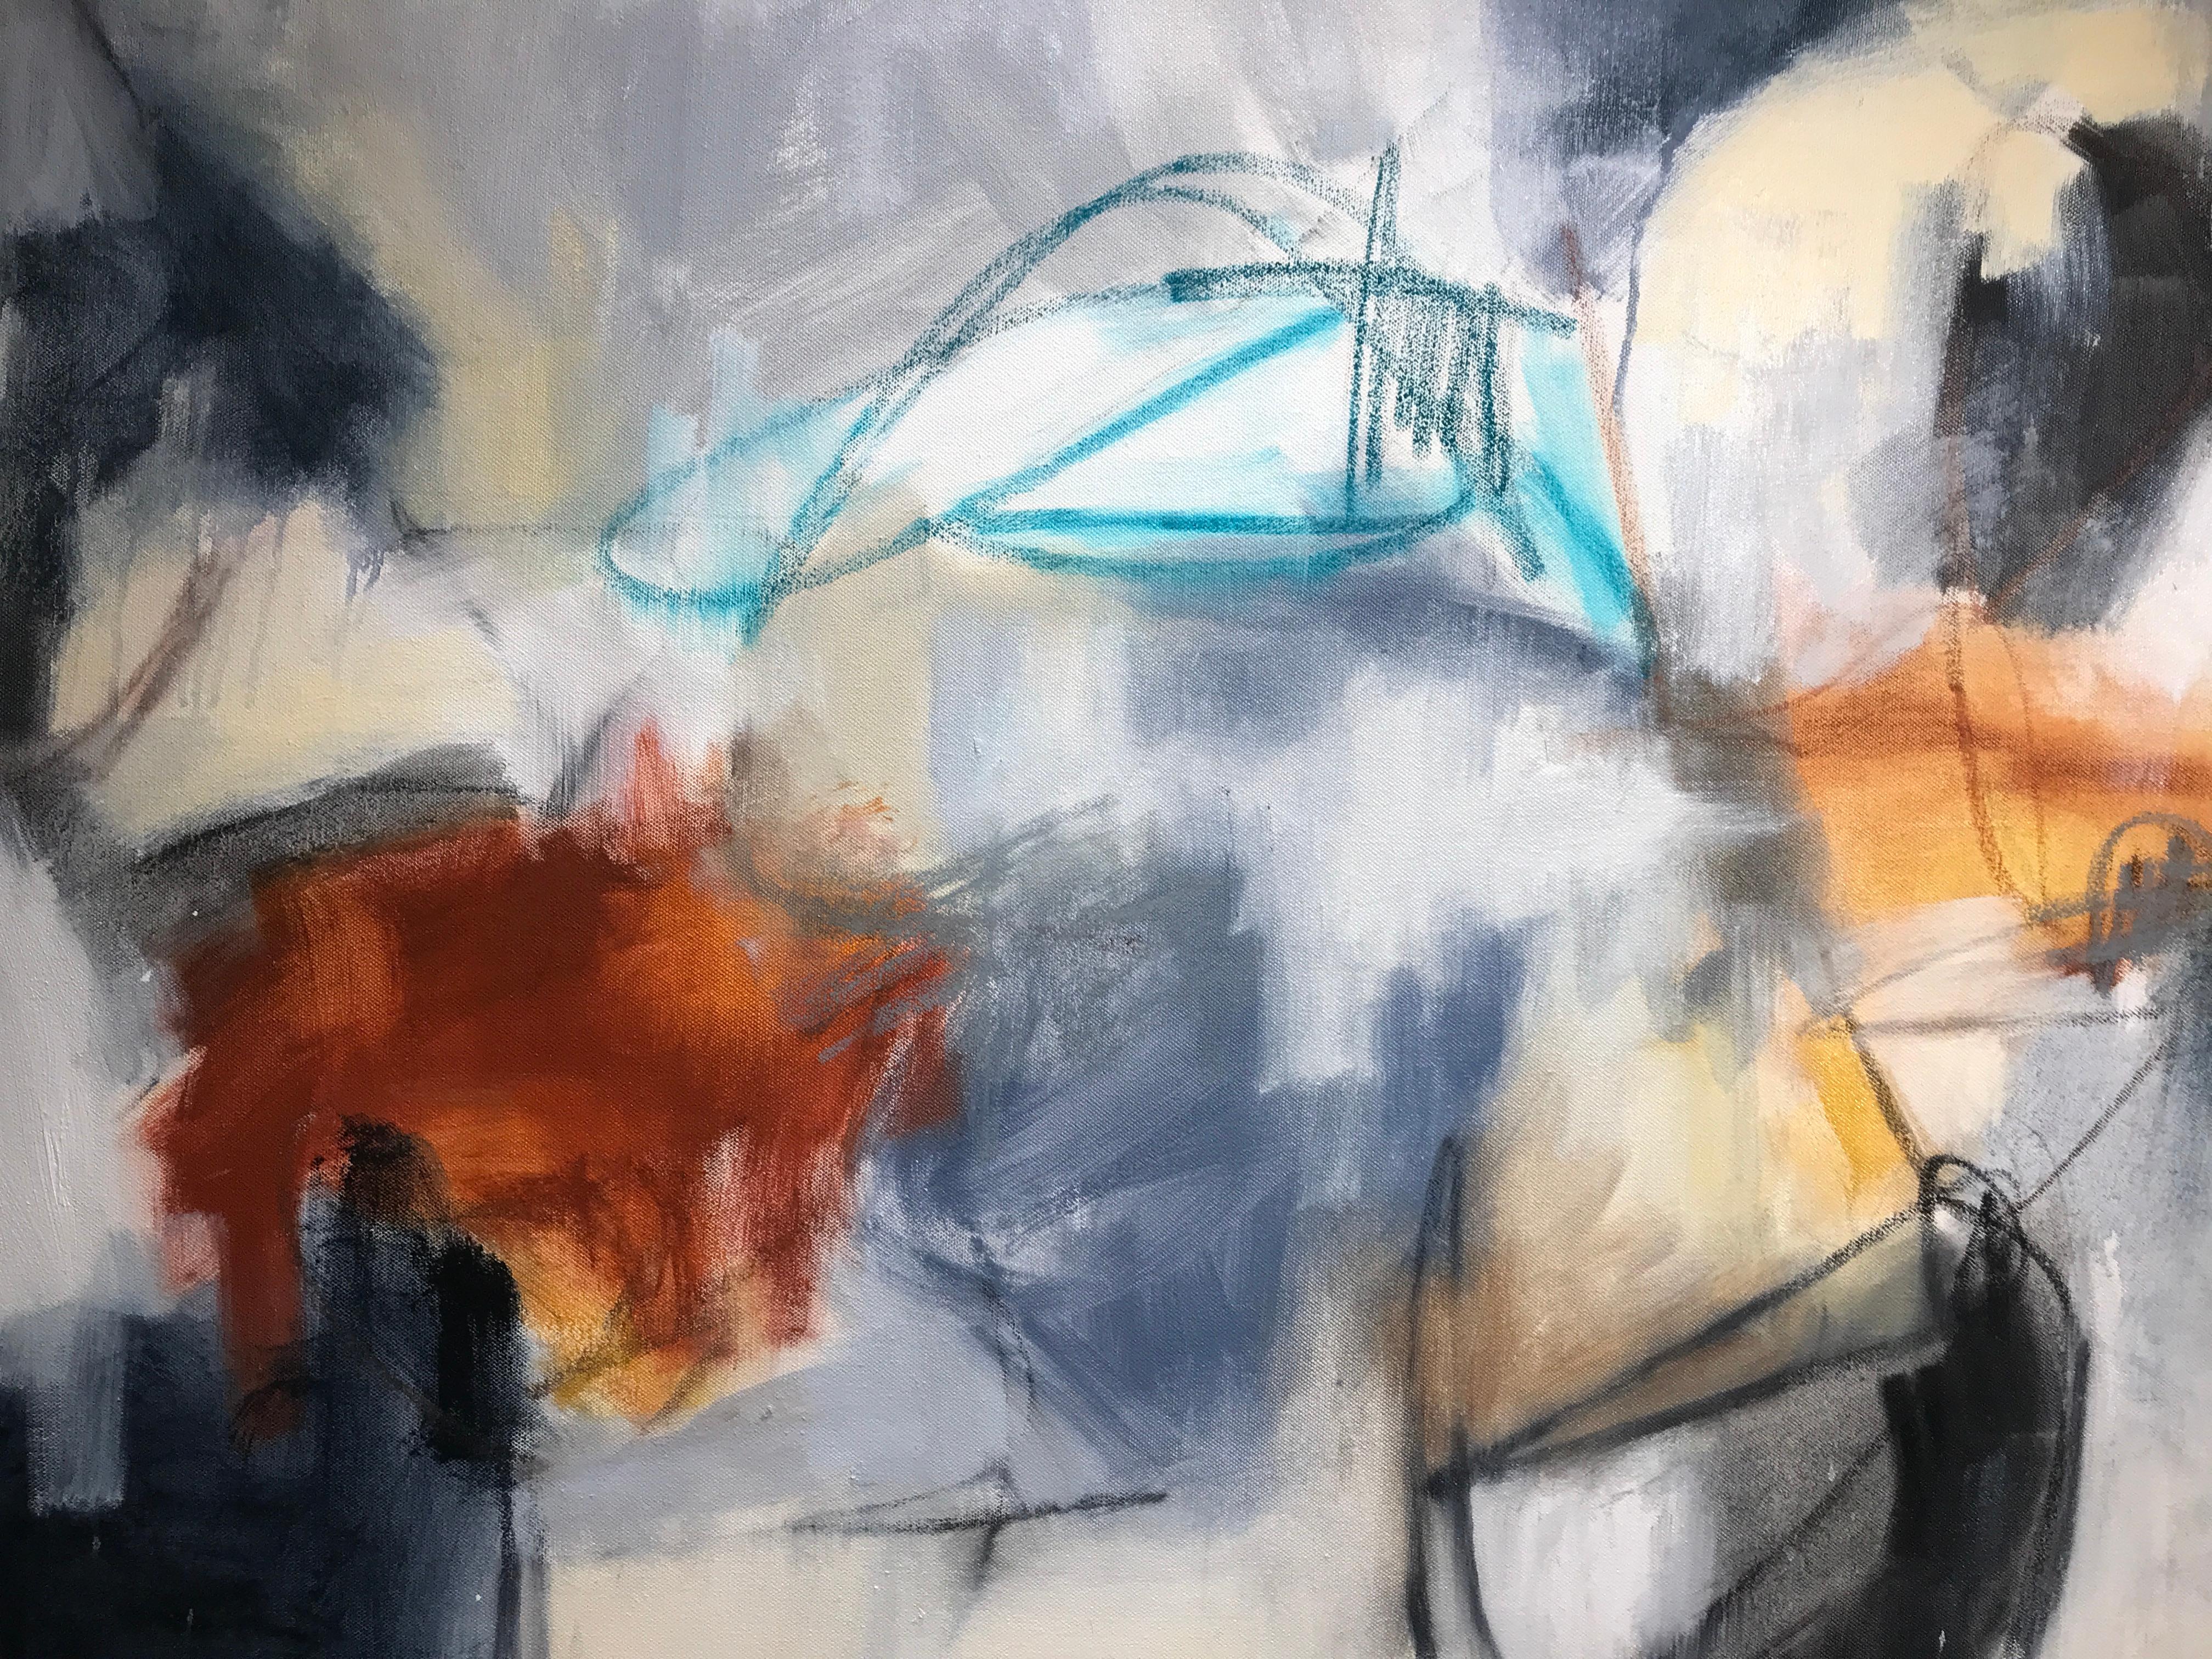 Marais, Augusta Wilson 2018 Large Abstract Mixed Media on Canvas Painting 5